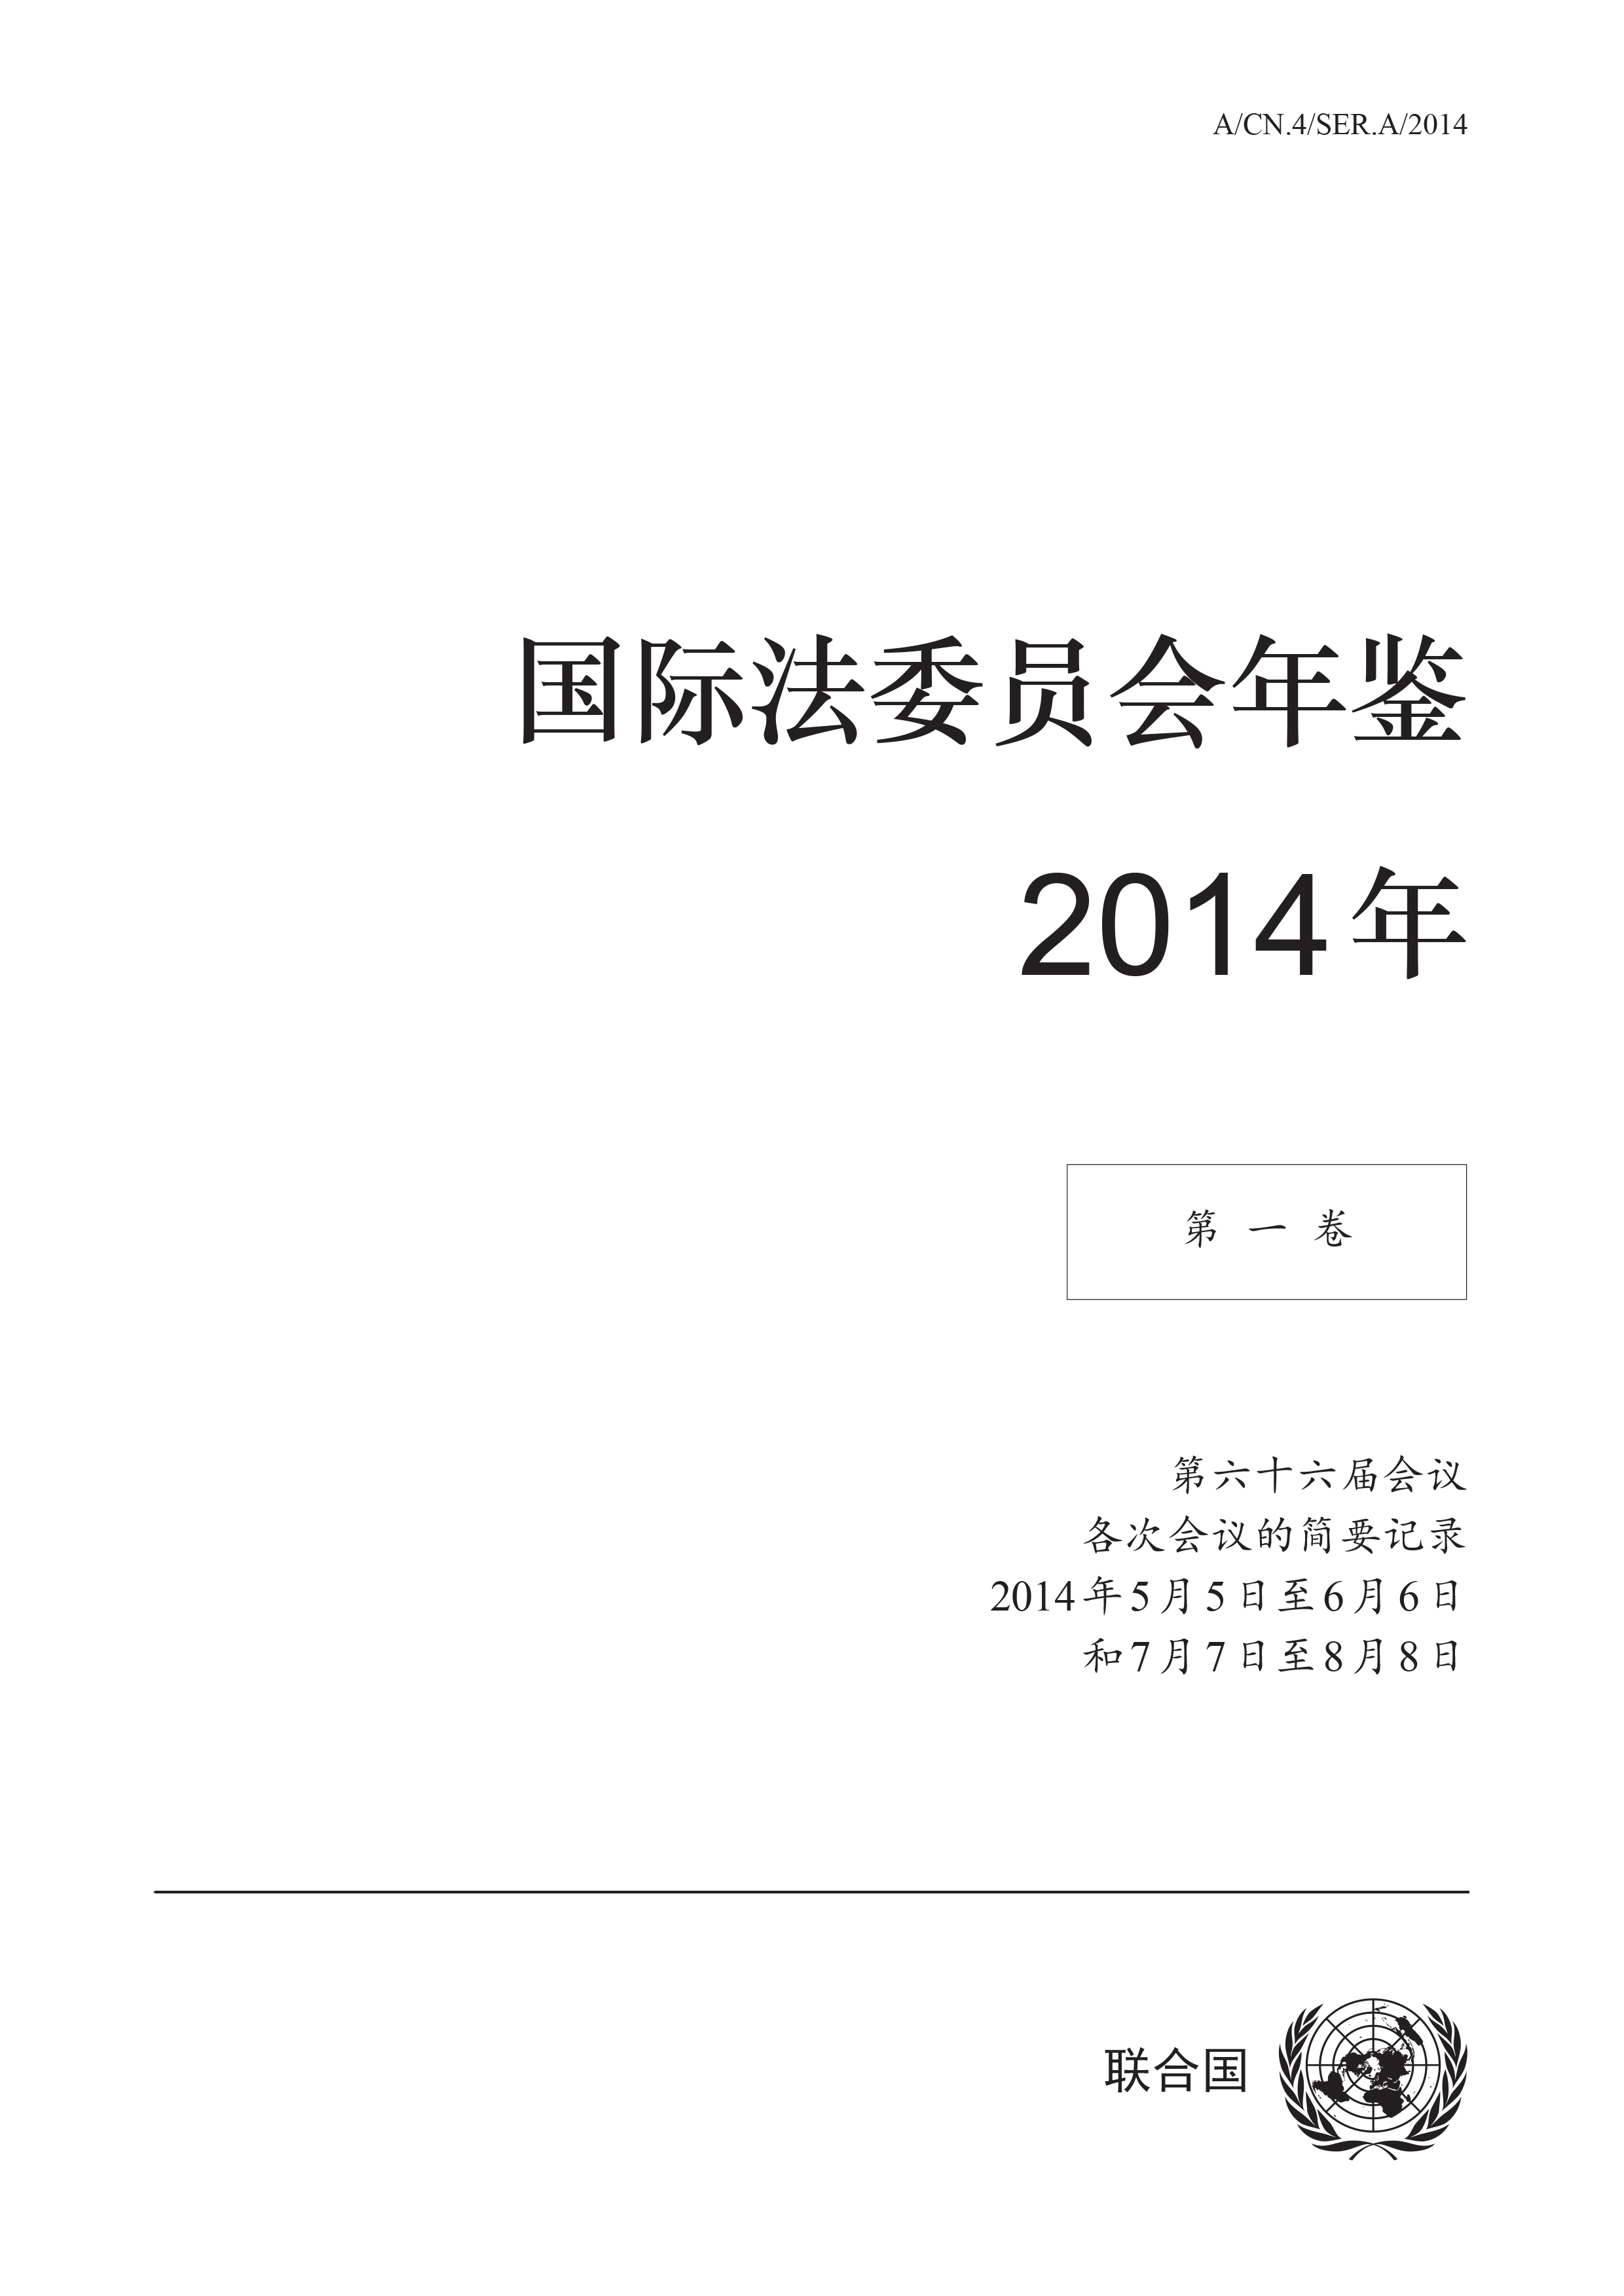 image of 国际法委员会年鉴 2014年, 第一卷